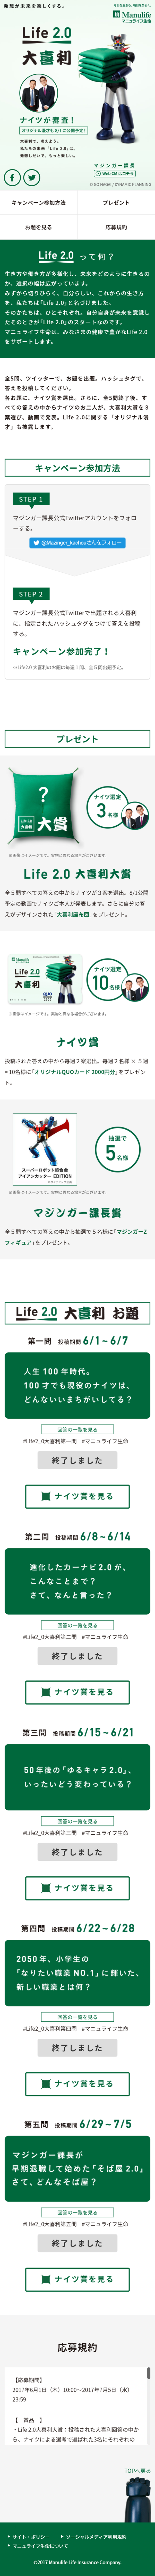 Life2.0 大喜利_sp_1